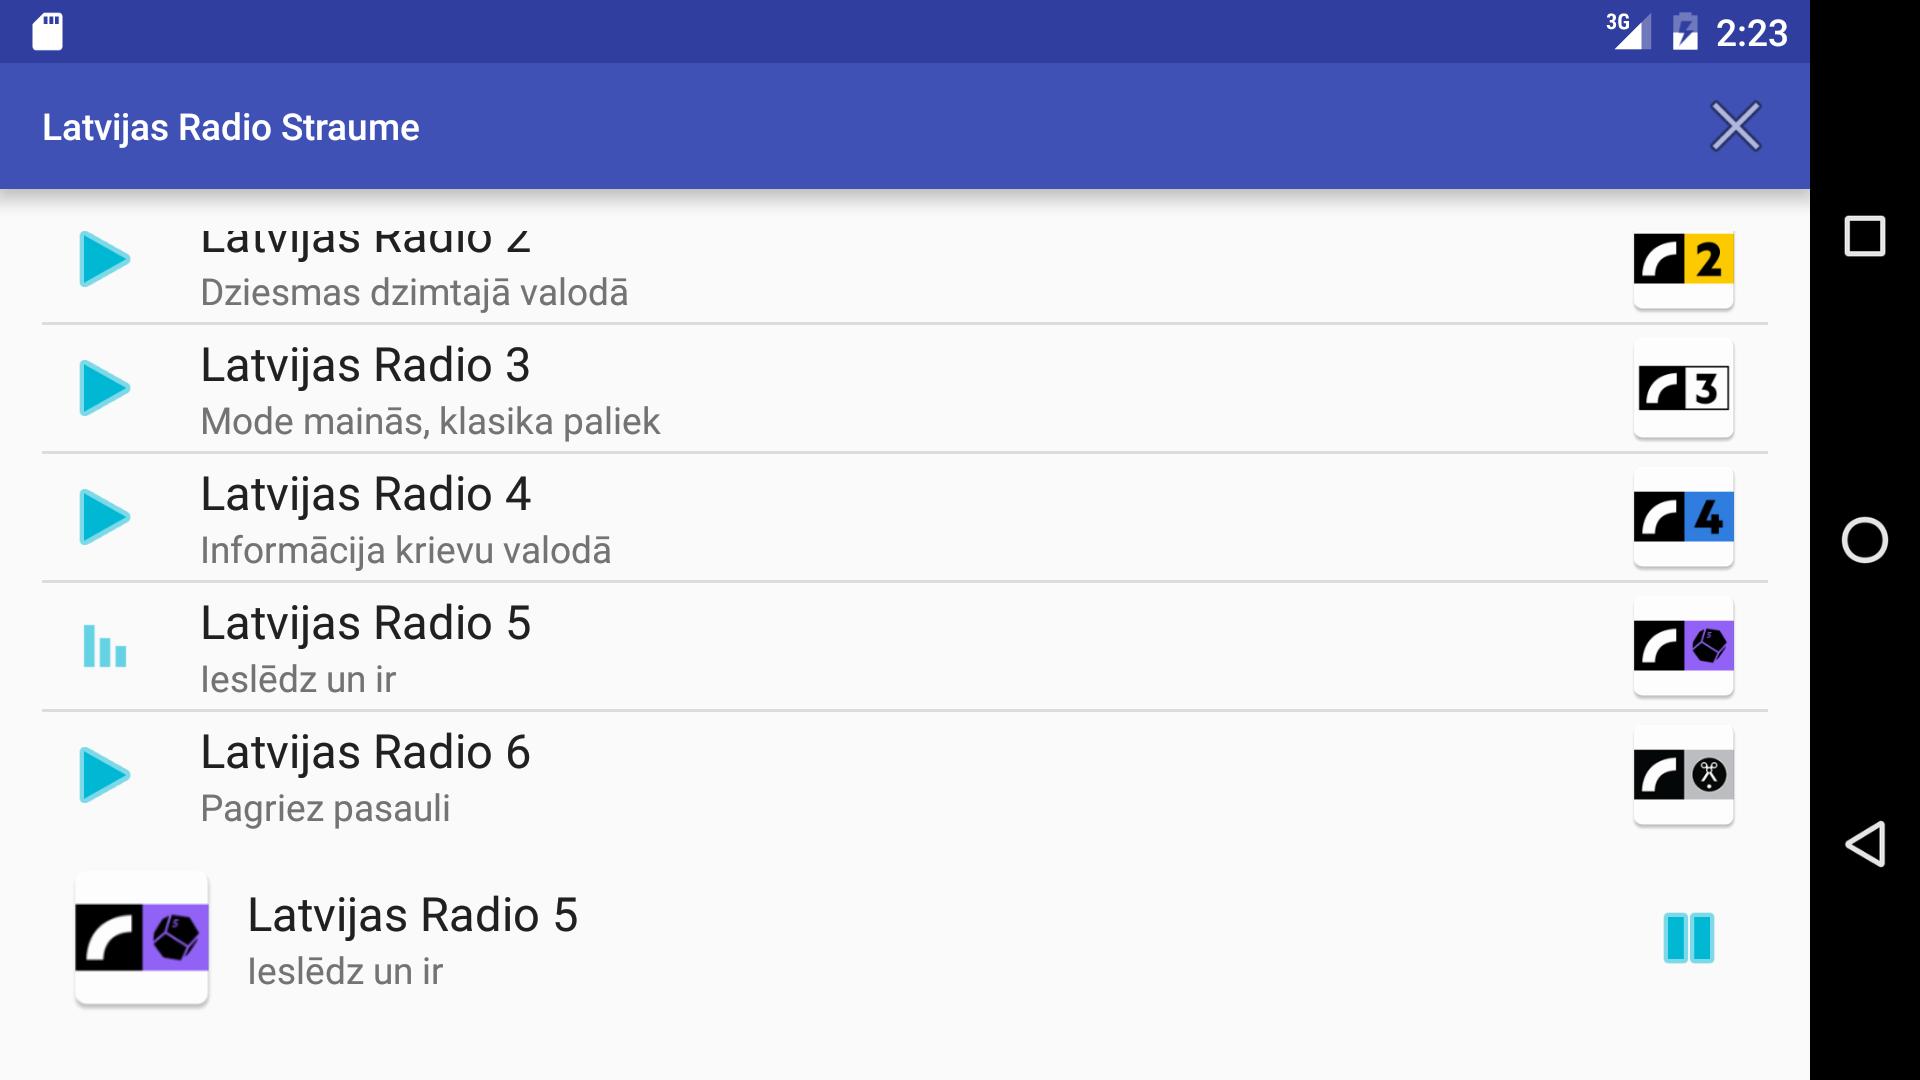 Latvijas Radio Stream for Android - APK Download